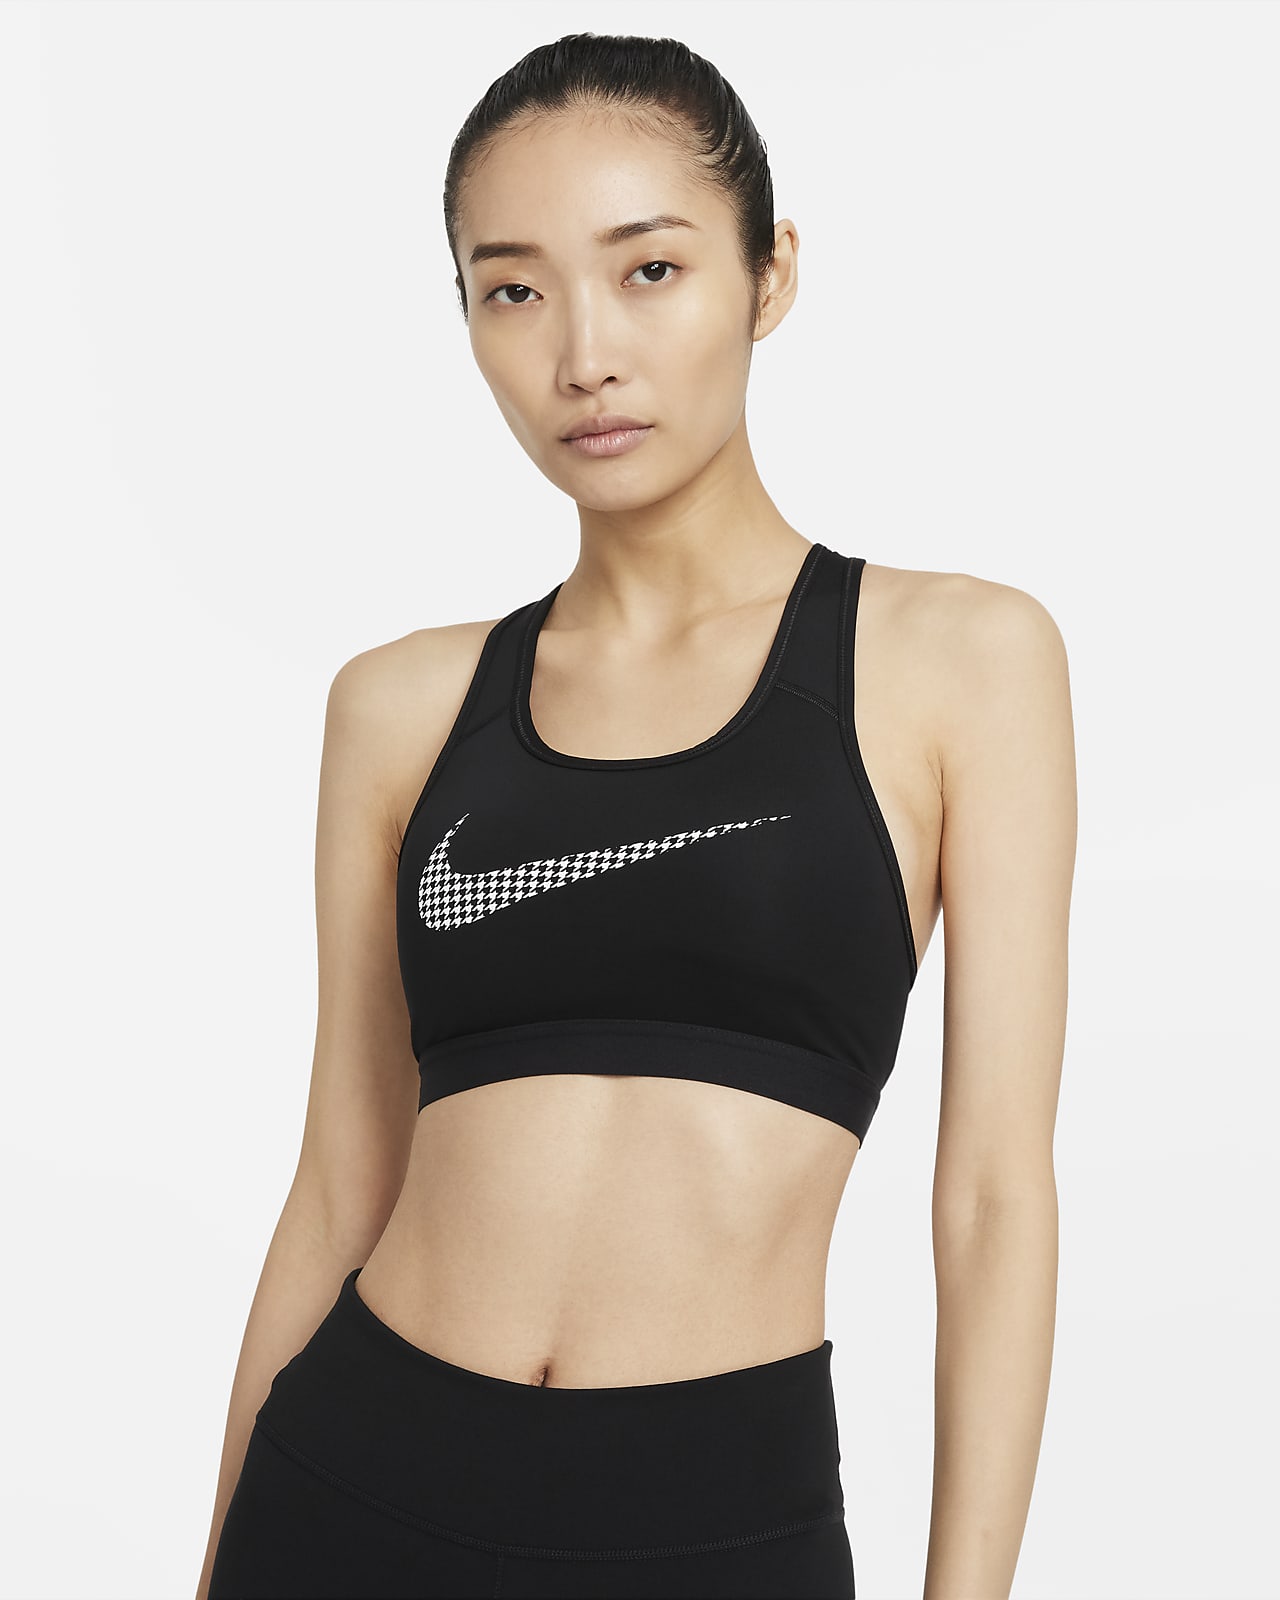 Nike Dri-FIT Swoosh Icon Clash Women's Medium-Support Non-Padded Graphic Sports Bra